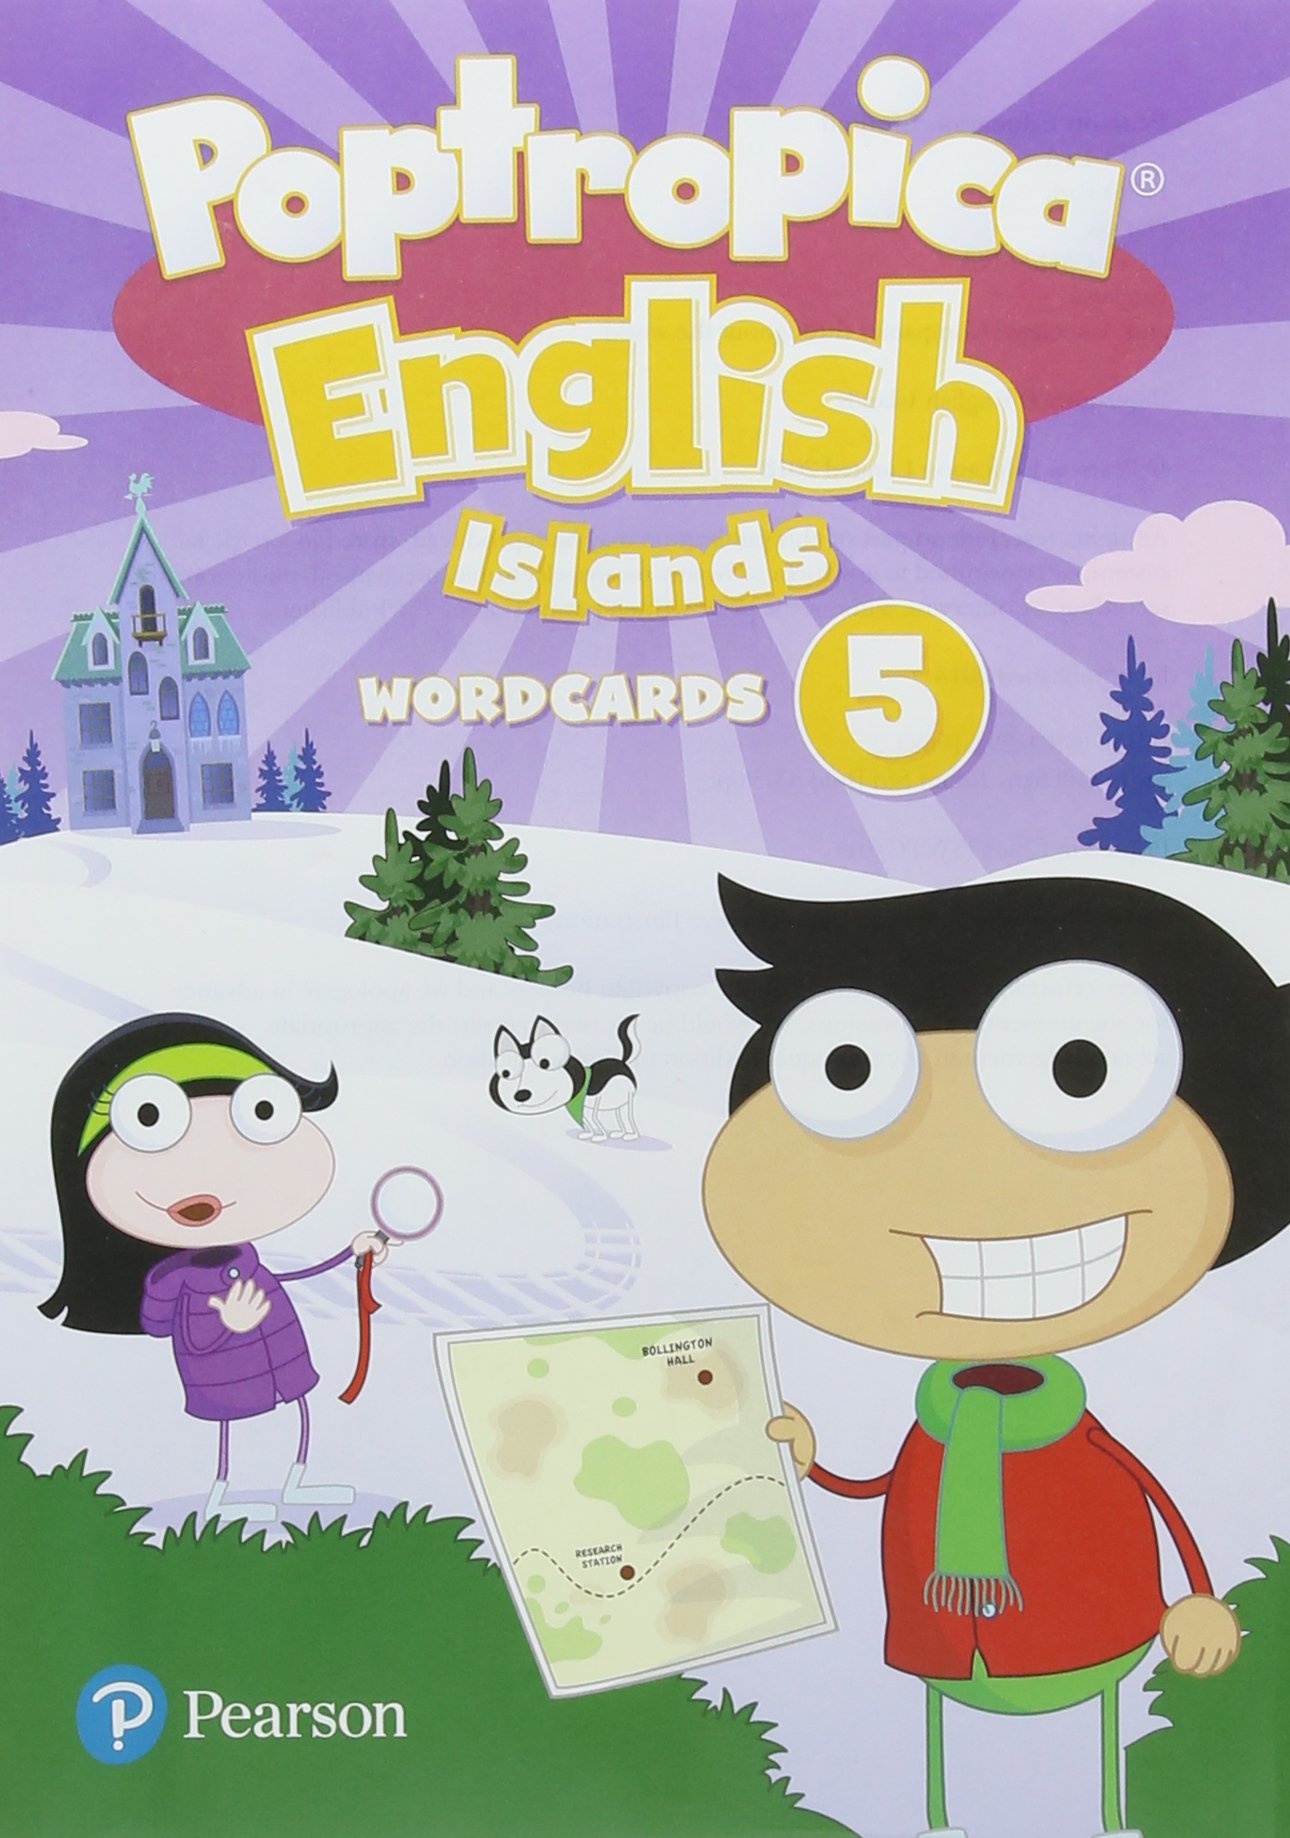 POPTROPICA ENGLISH ISLANDS 5 Wordcards